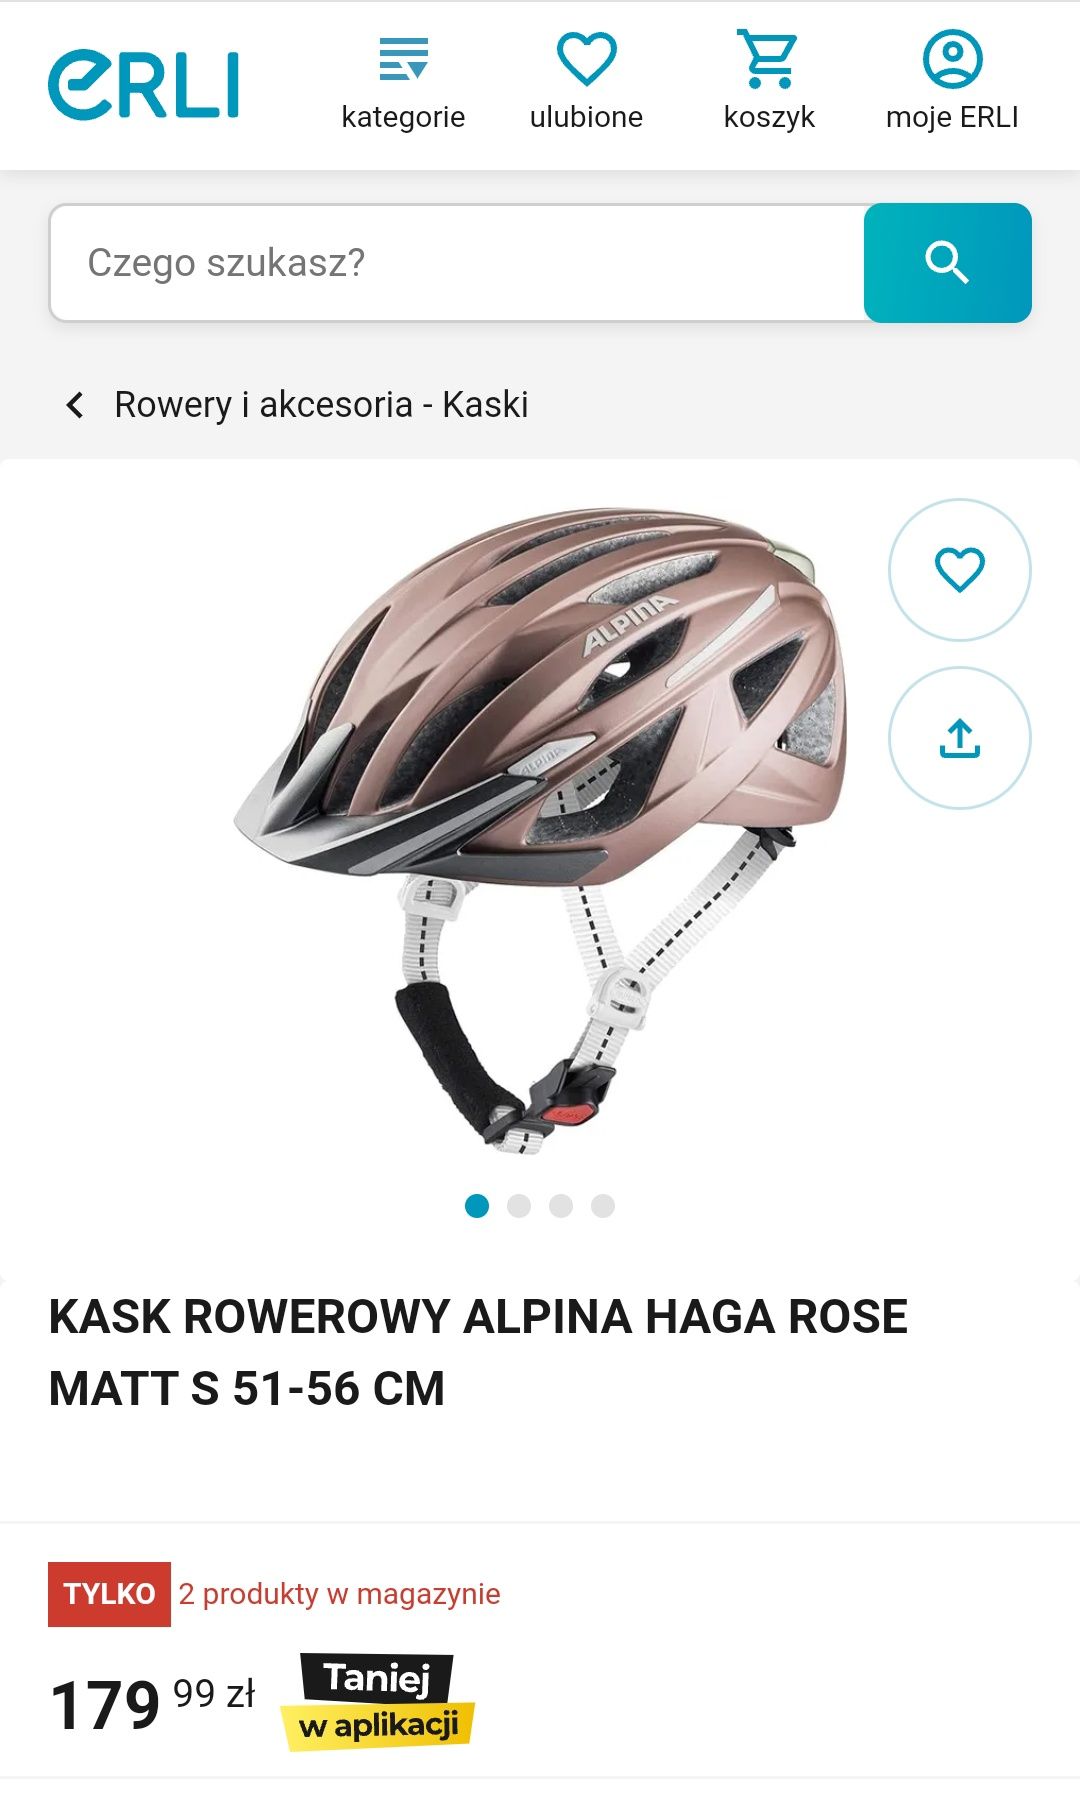 Kask rowerowy Alpina Haga rose matt r. S 51-56 cm